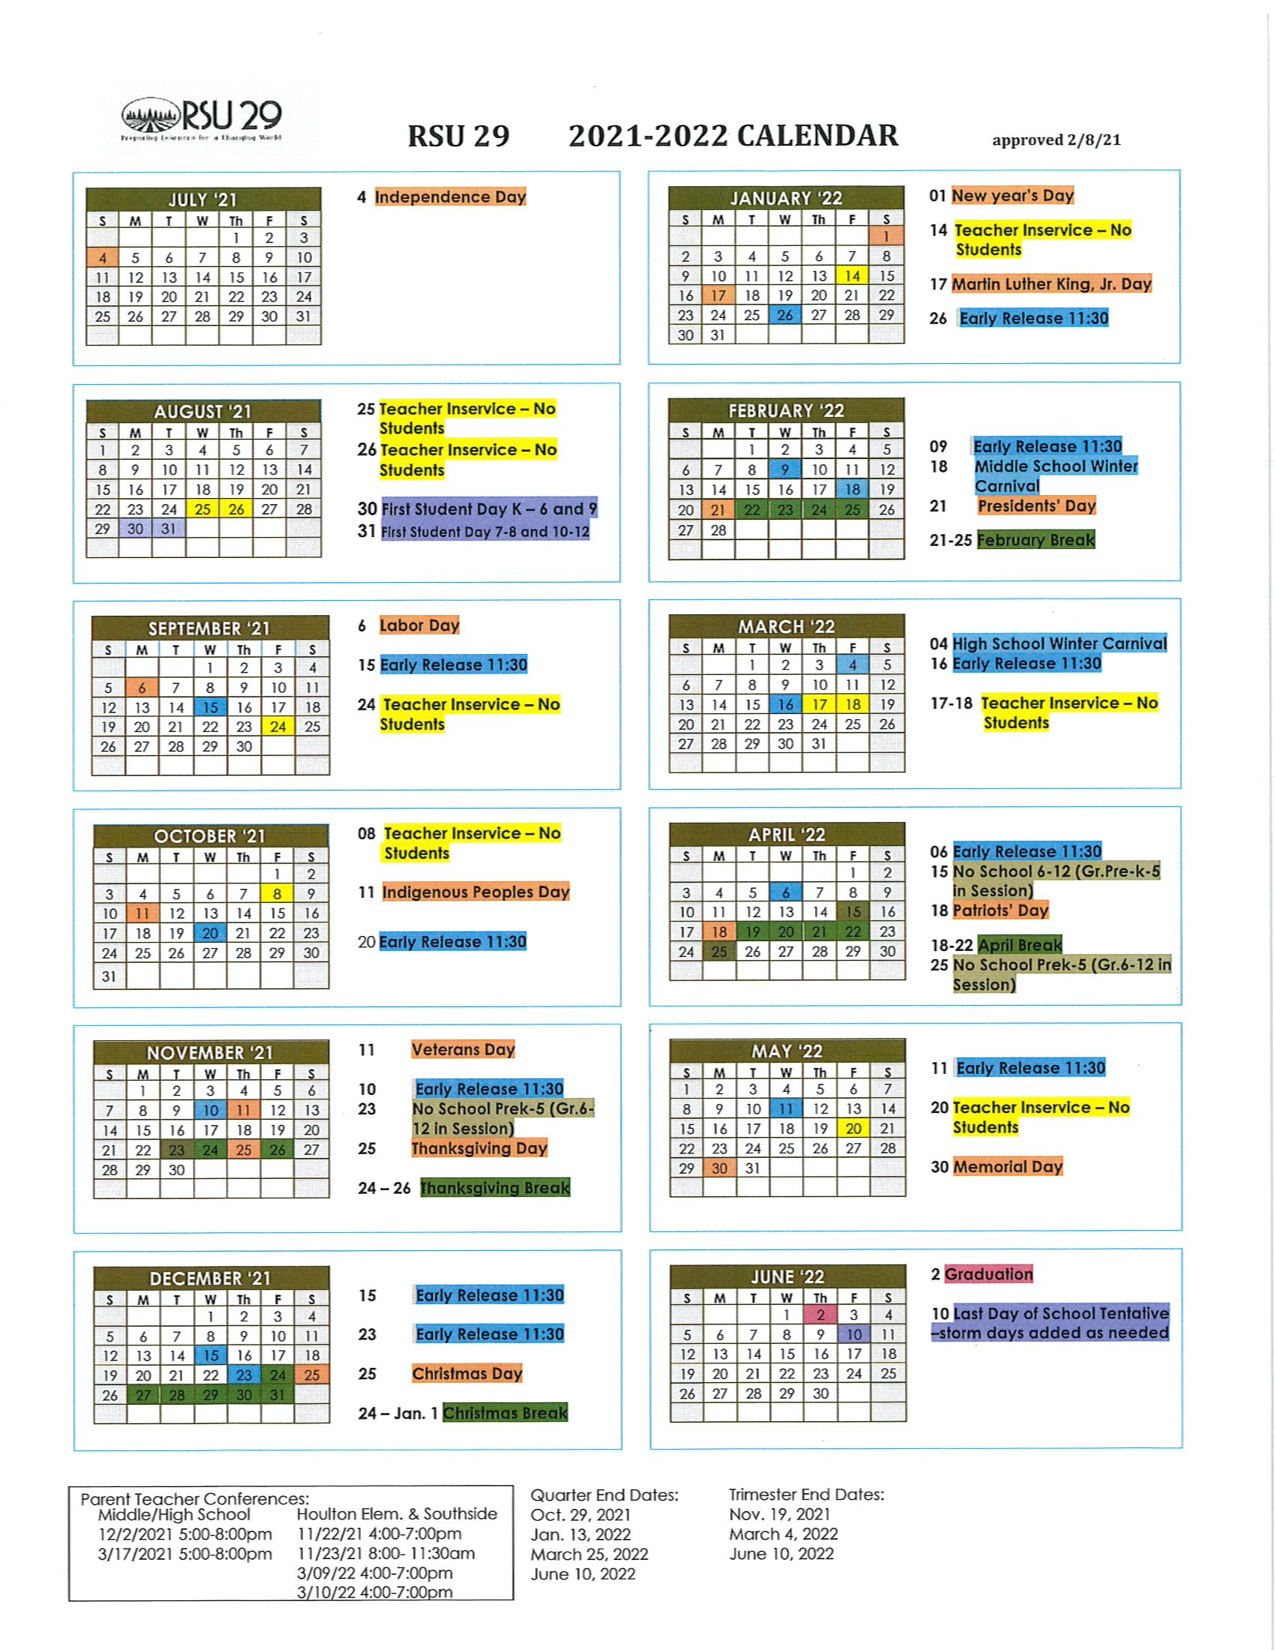 RSU 29 Calendar